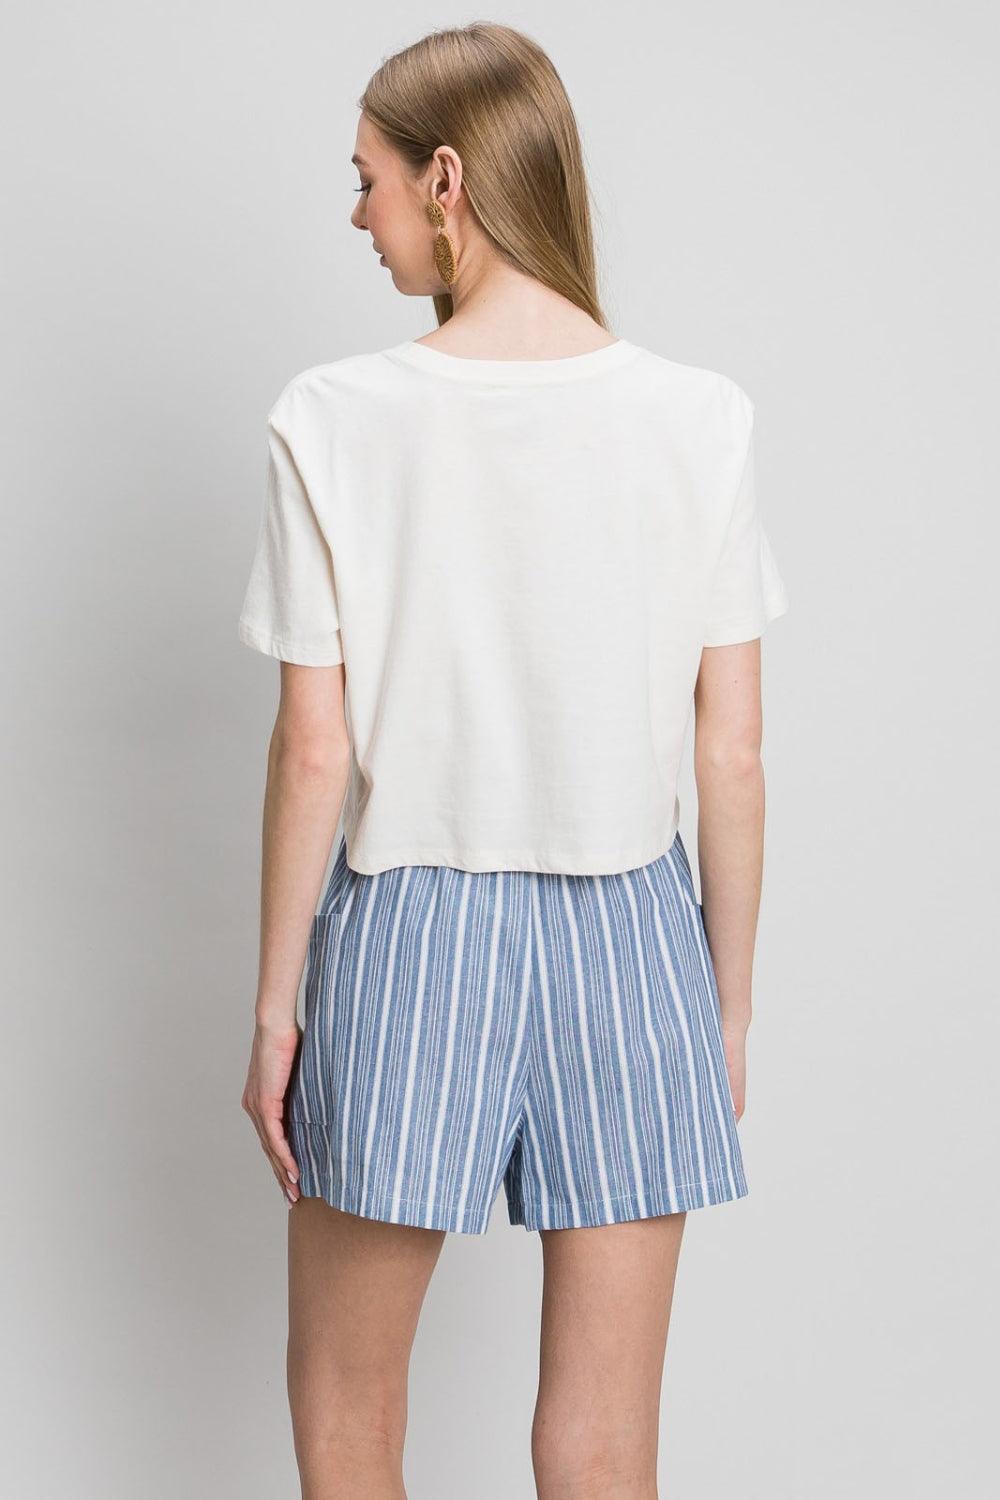 Cotton Bleu by Nu Label Yarn Dye Striped Shorts Shorts